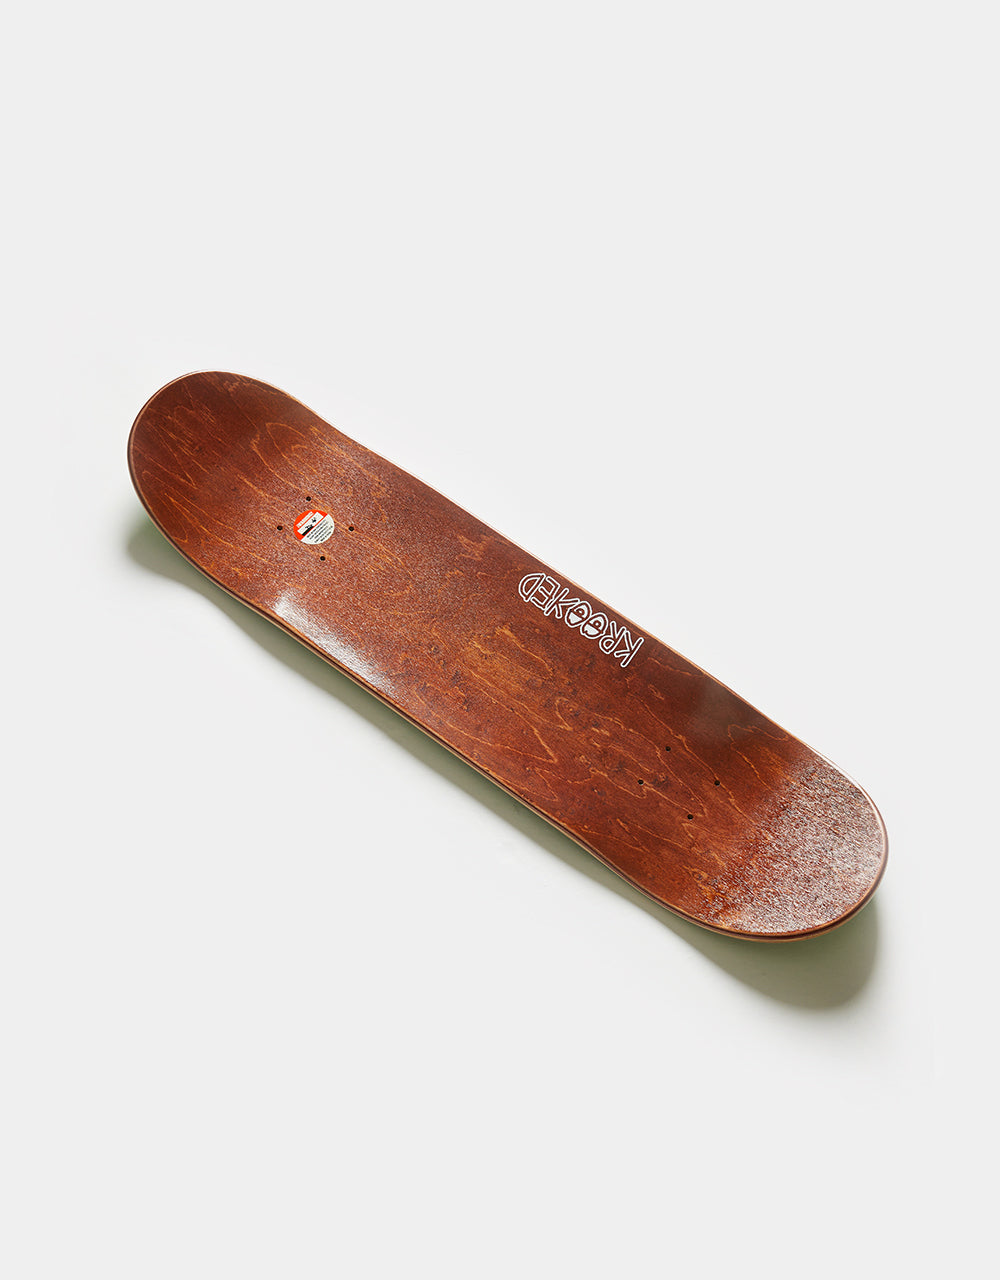 Krooked Cromer Desperado Skateboard Deck - 8.06"